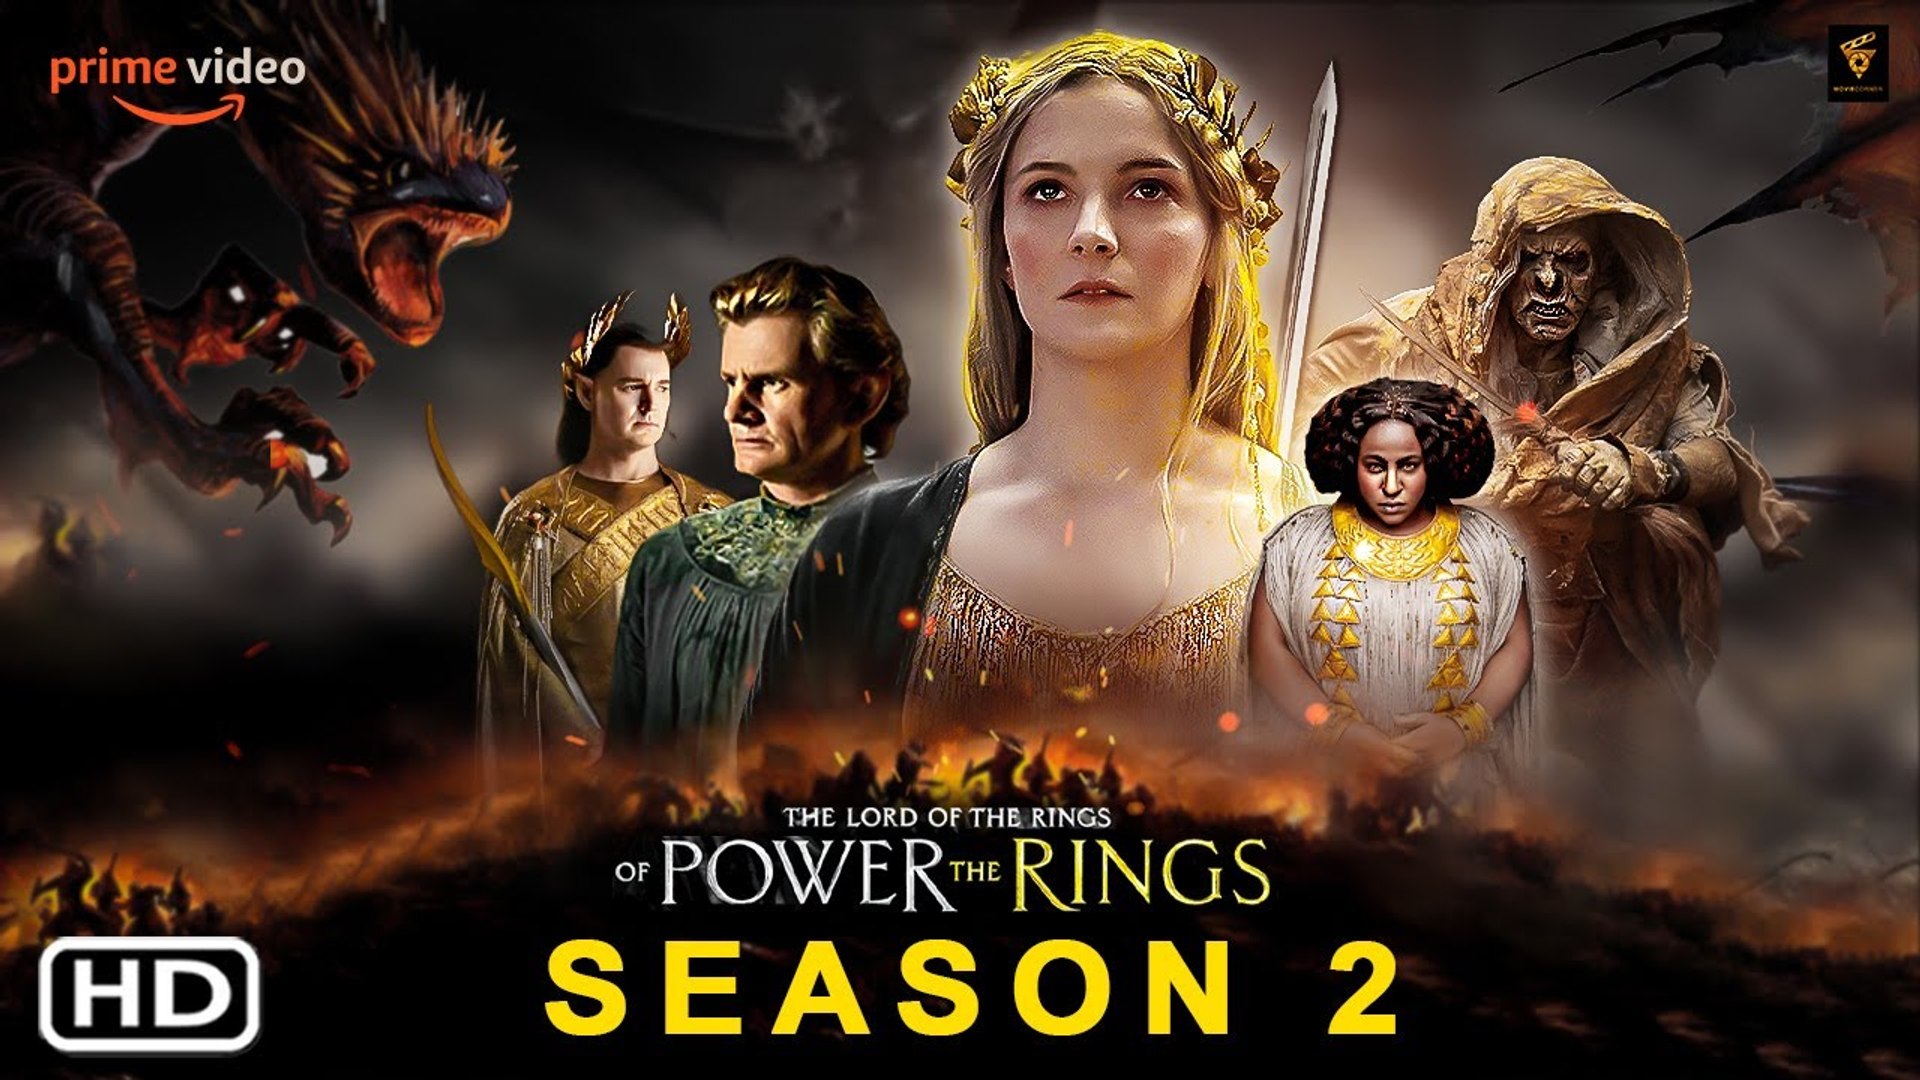 The Rings of Power Season 2 Trailer  Prime Vidoe, Robert Aramayo,  Markella Kavenagh - video Dailymotion